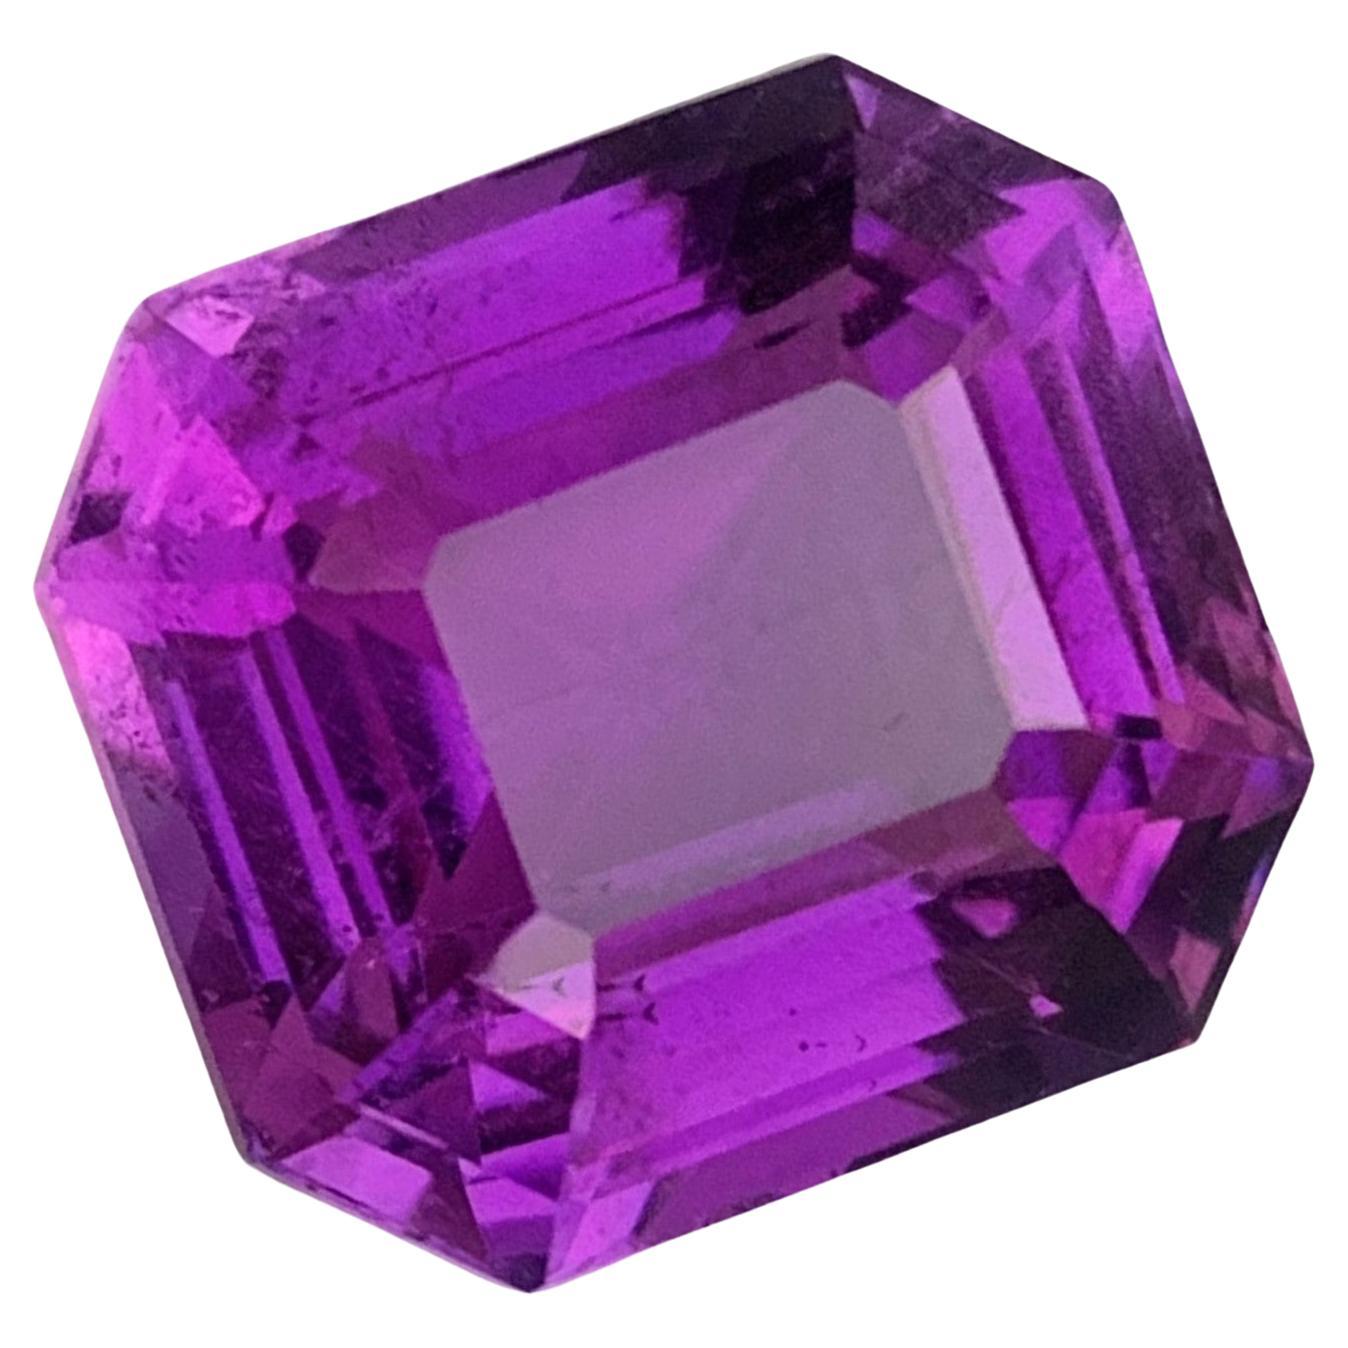 Intense Dark Purple Loose Amethyst Octagon Shape 13.50 Carat For Jewelry Making For Sale